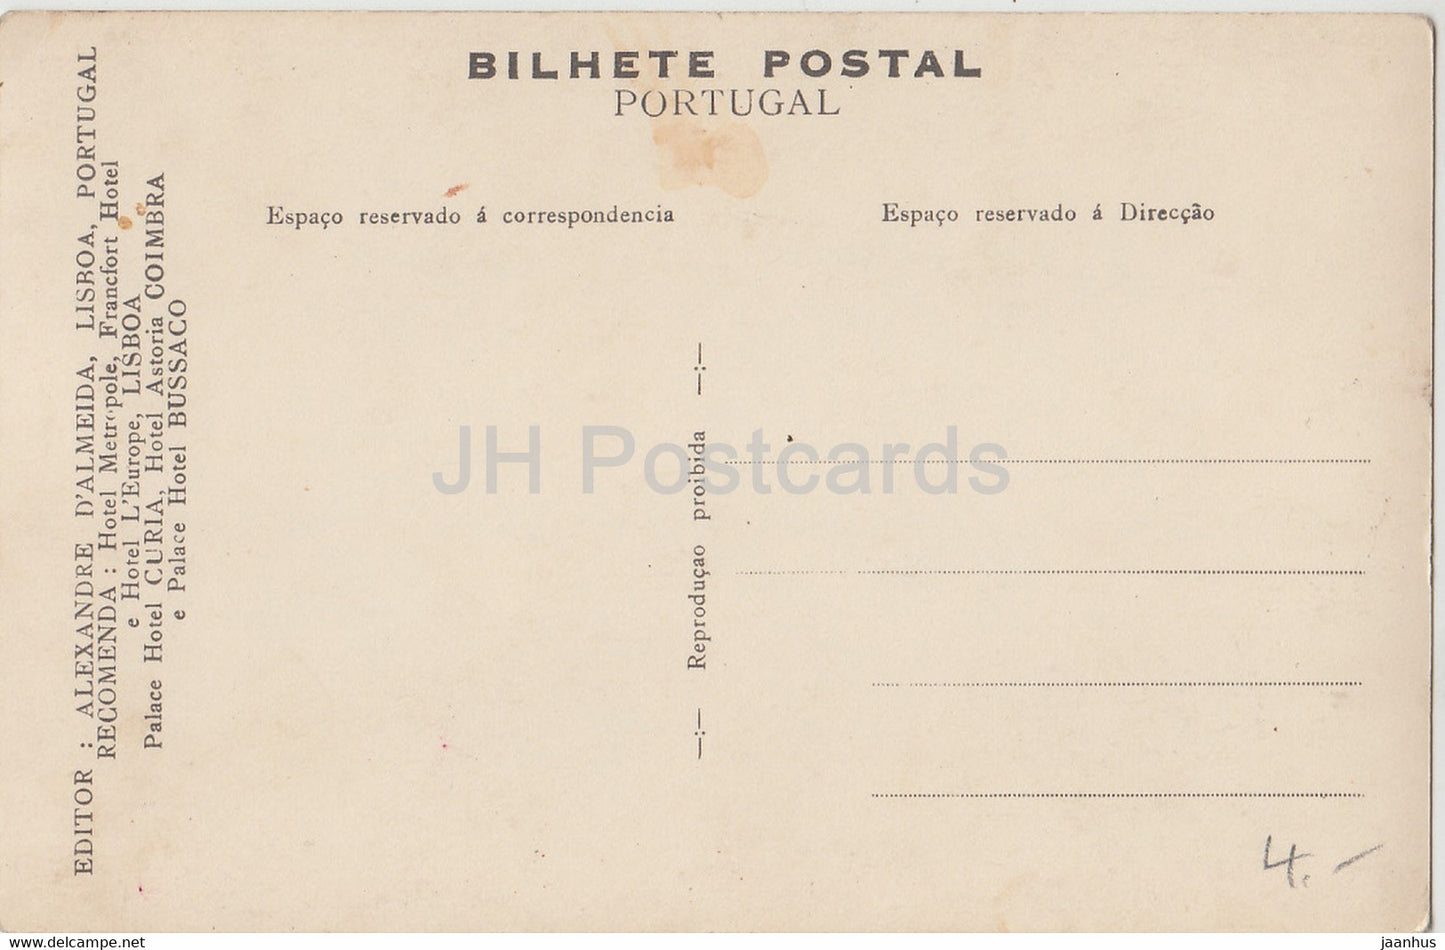 Bussaco - Floresta e Palace Hotel - 47 - carte postale ancienne - Portugal - inutilisée